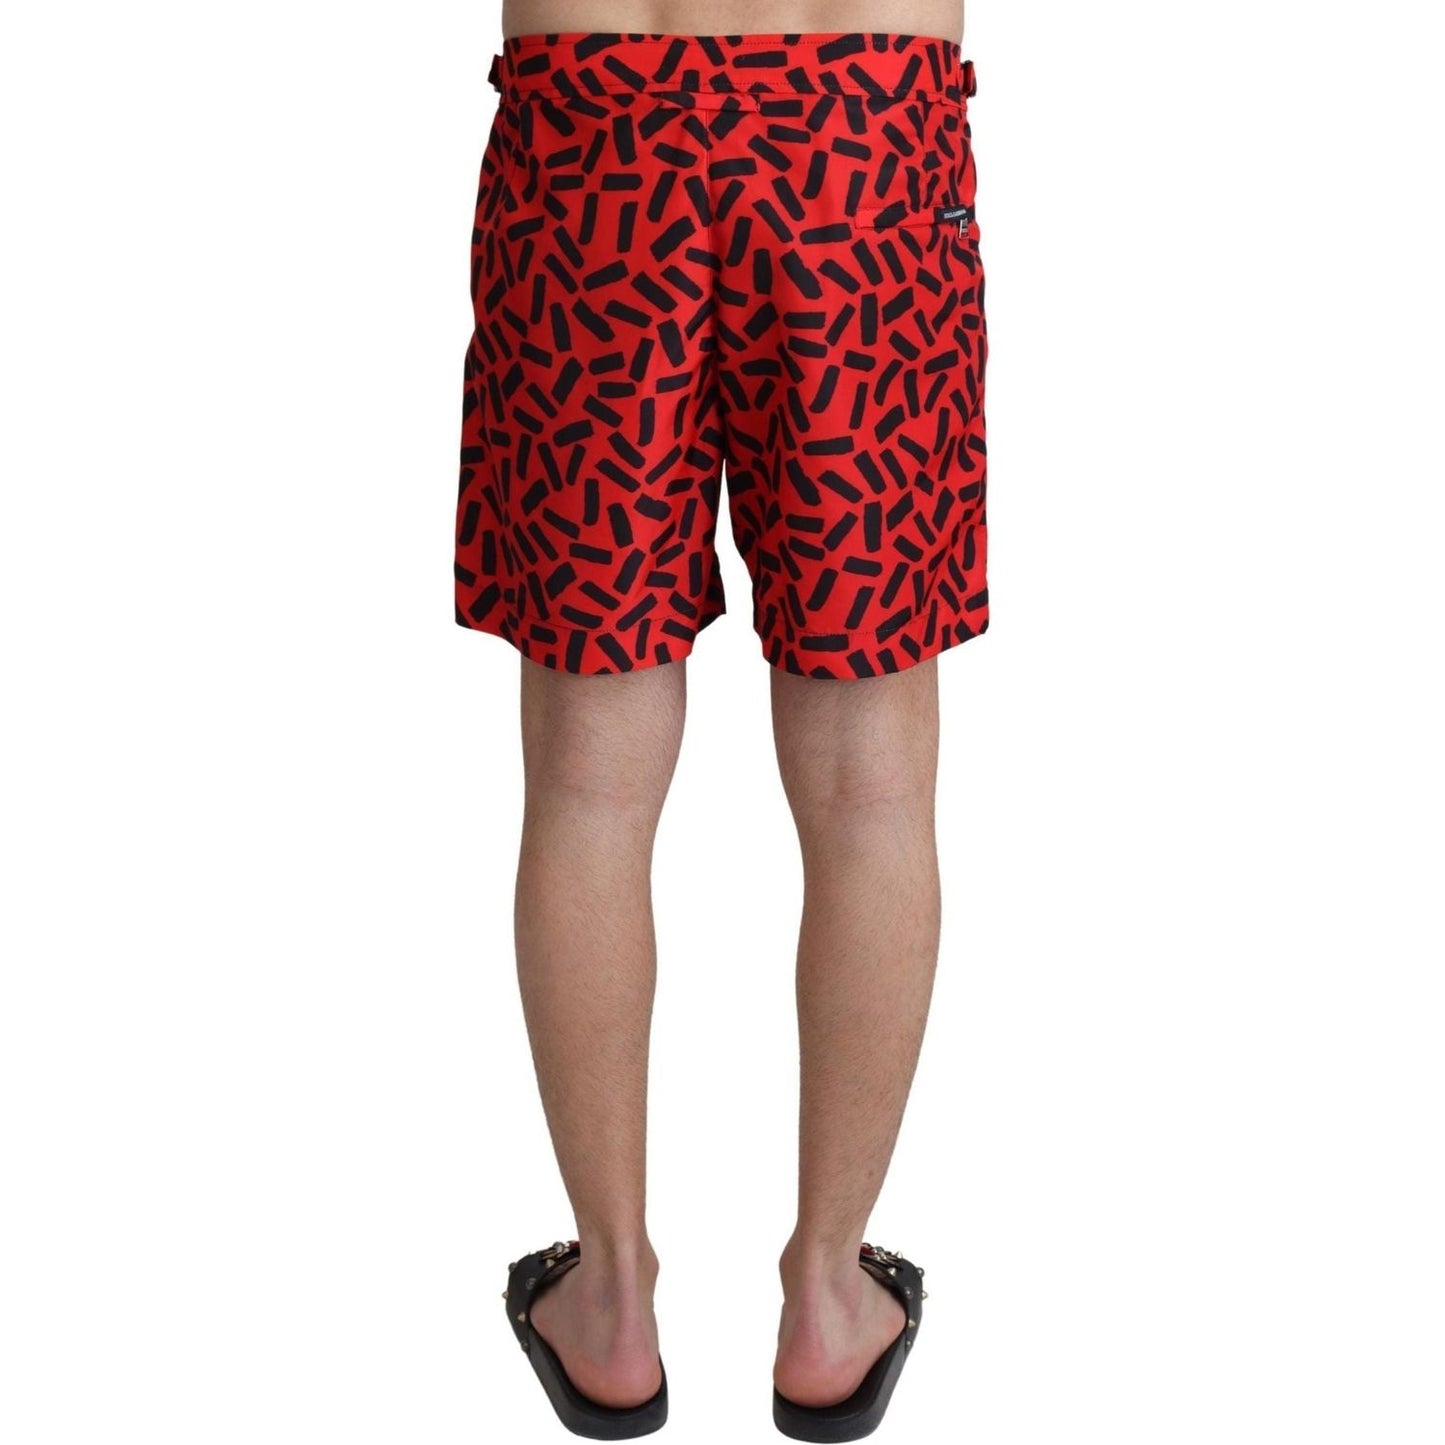 Dolce & GabbanaChic Red Swim Trunks Boxer ShortsMcRichard Designer Brands£269.00